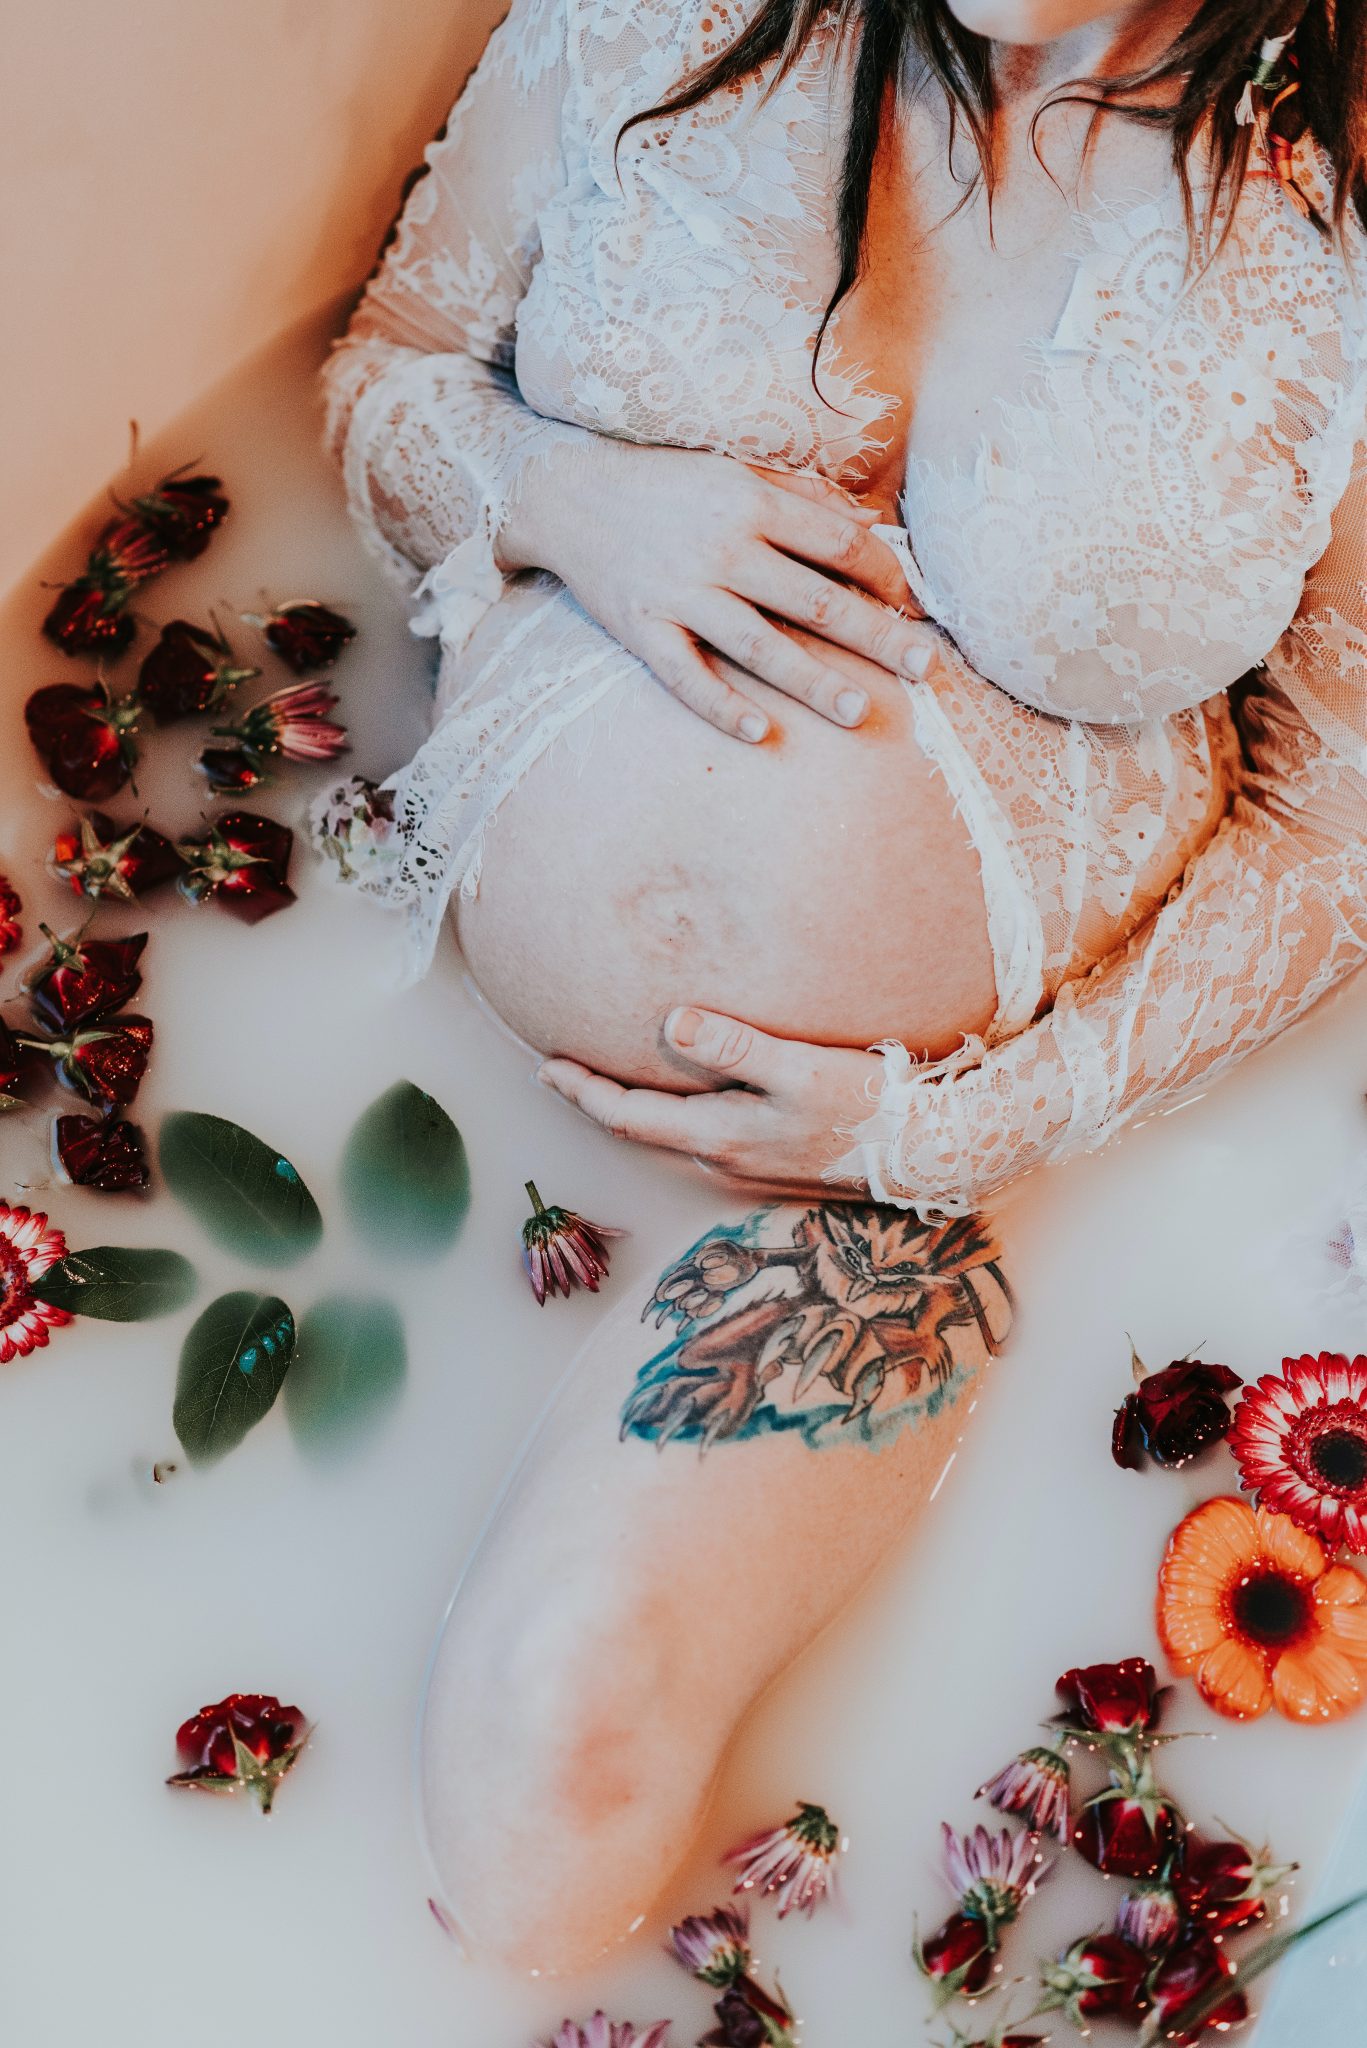 Milk bath pregnancy photos